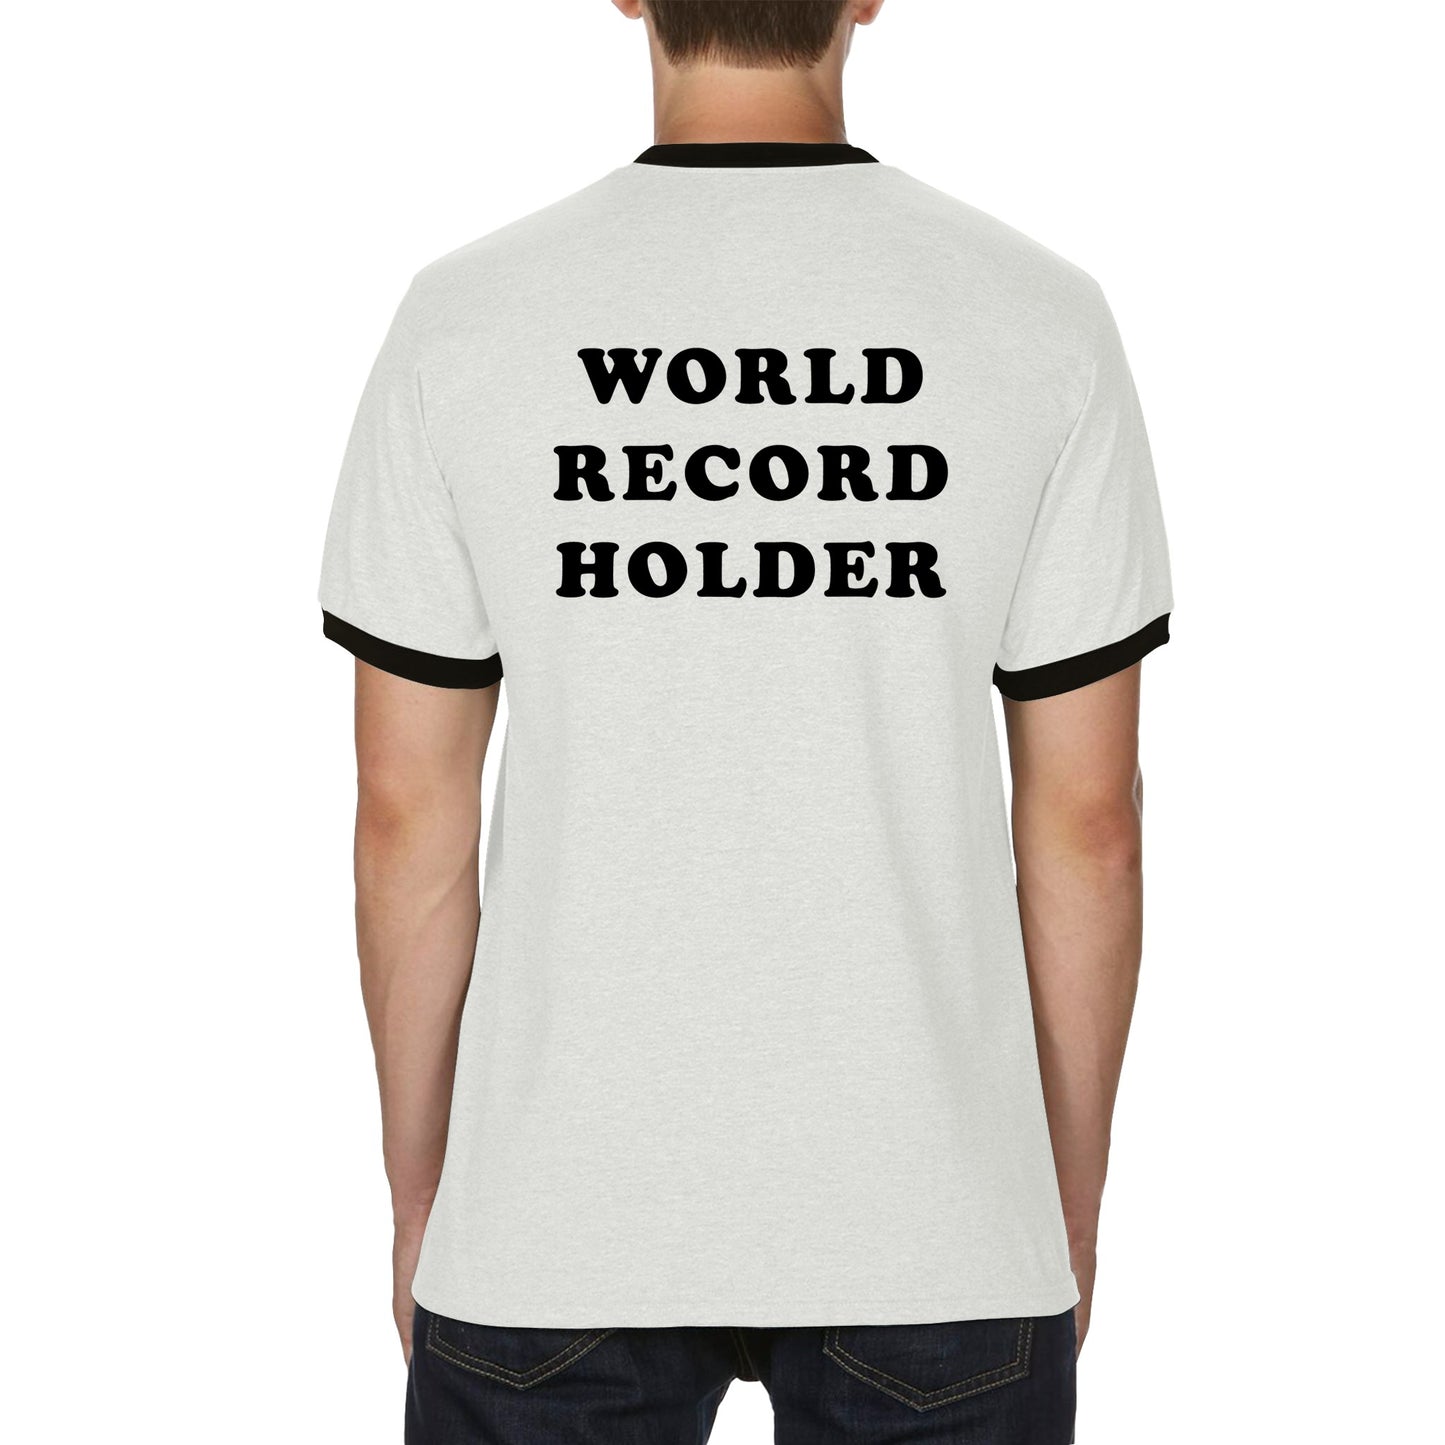 WORLD RECORD HOLDER 1982 CLASSIC EDITION RINGER T-SHIRT